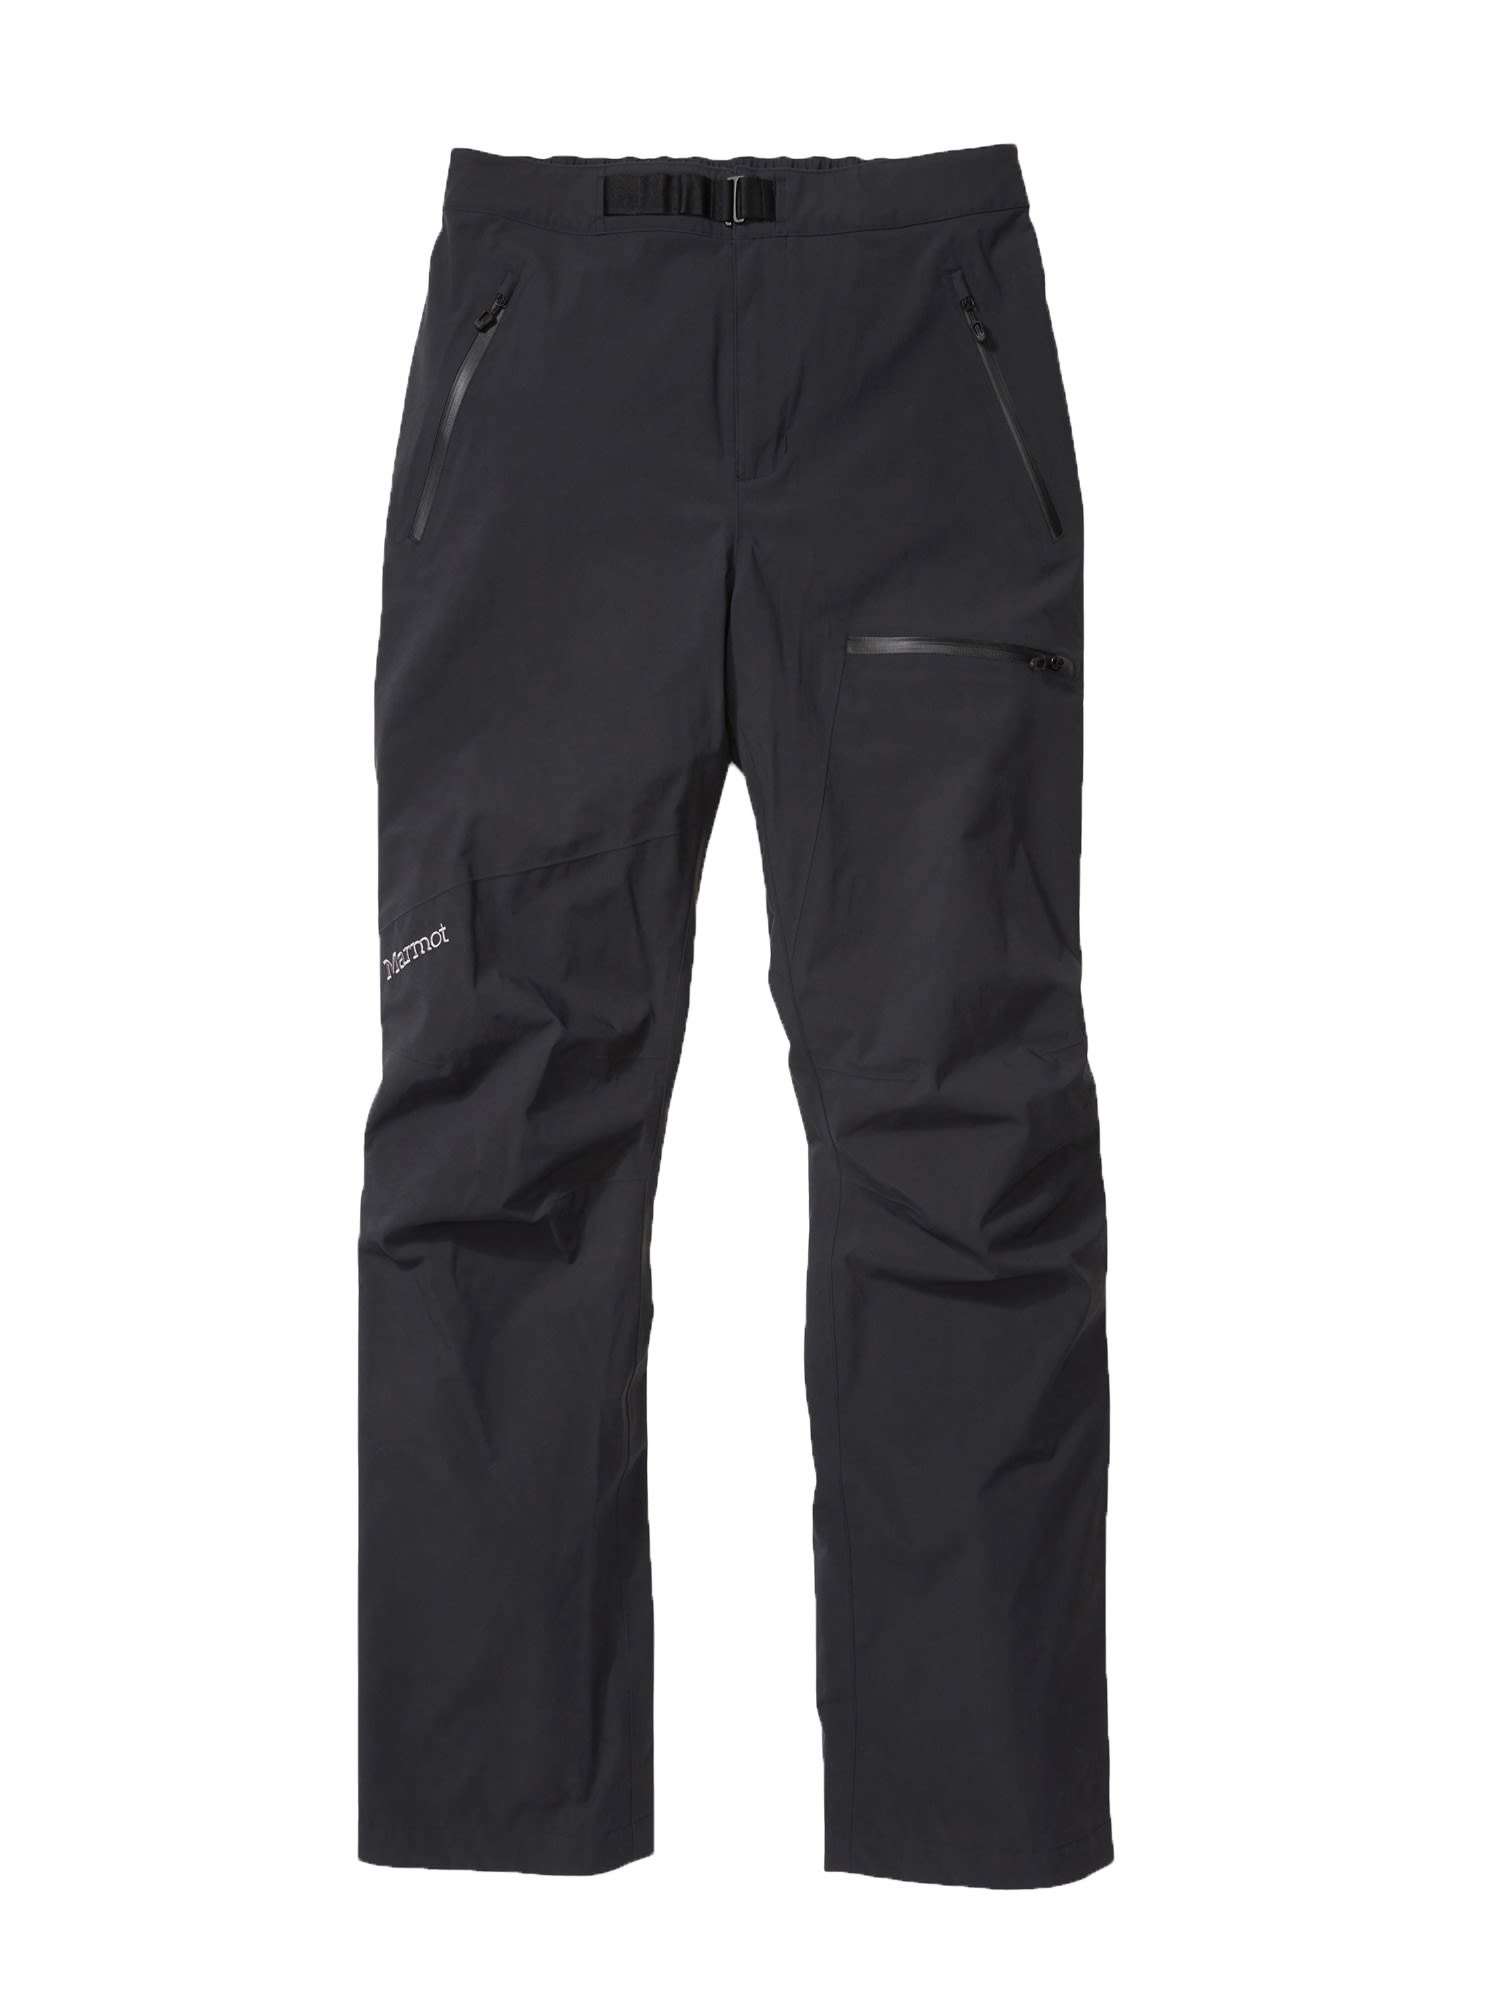 Marmot Evodry Torreys Pant Schwarz- Male Jogginghosen- Grsse S - Farbe Black